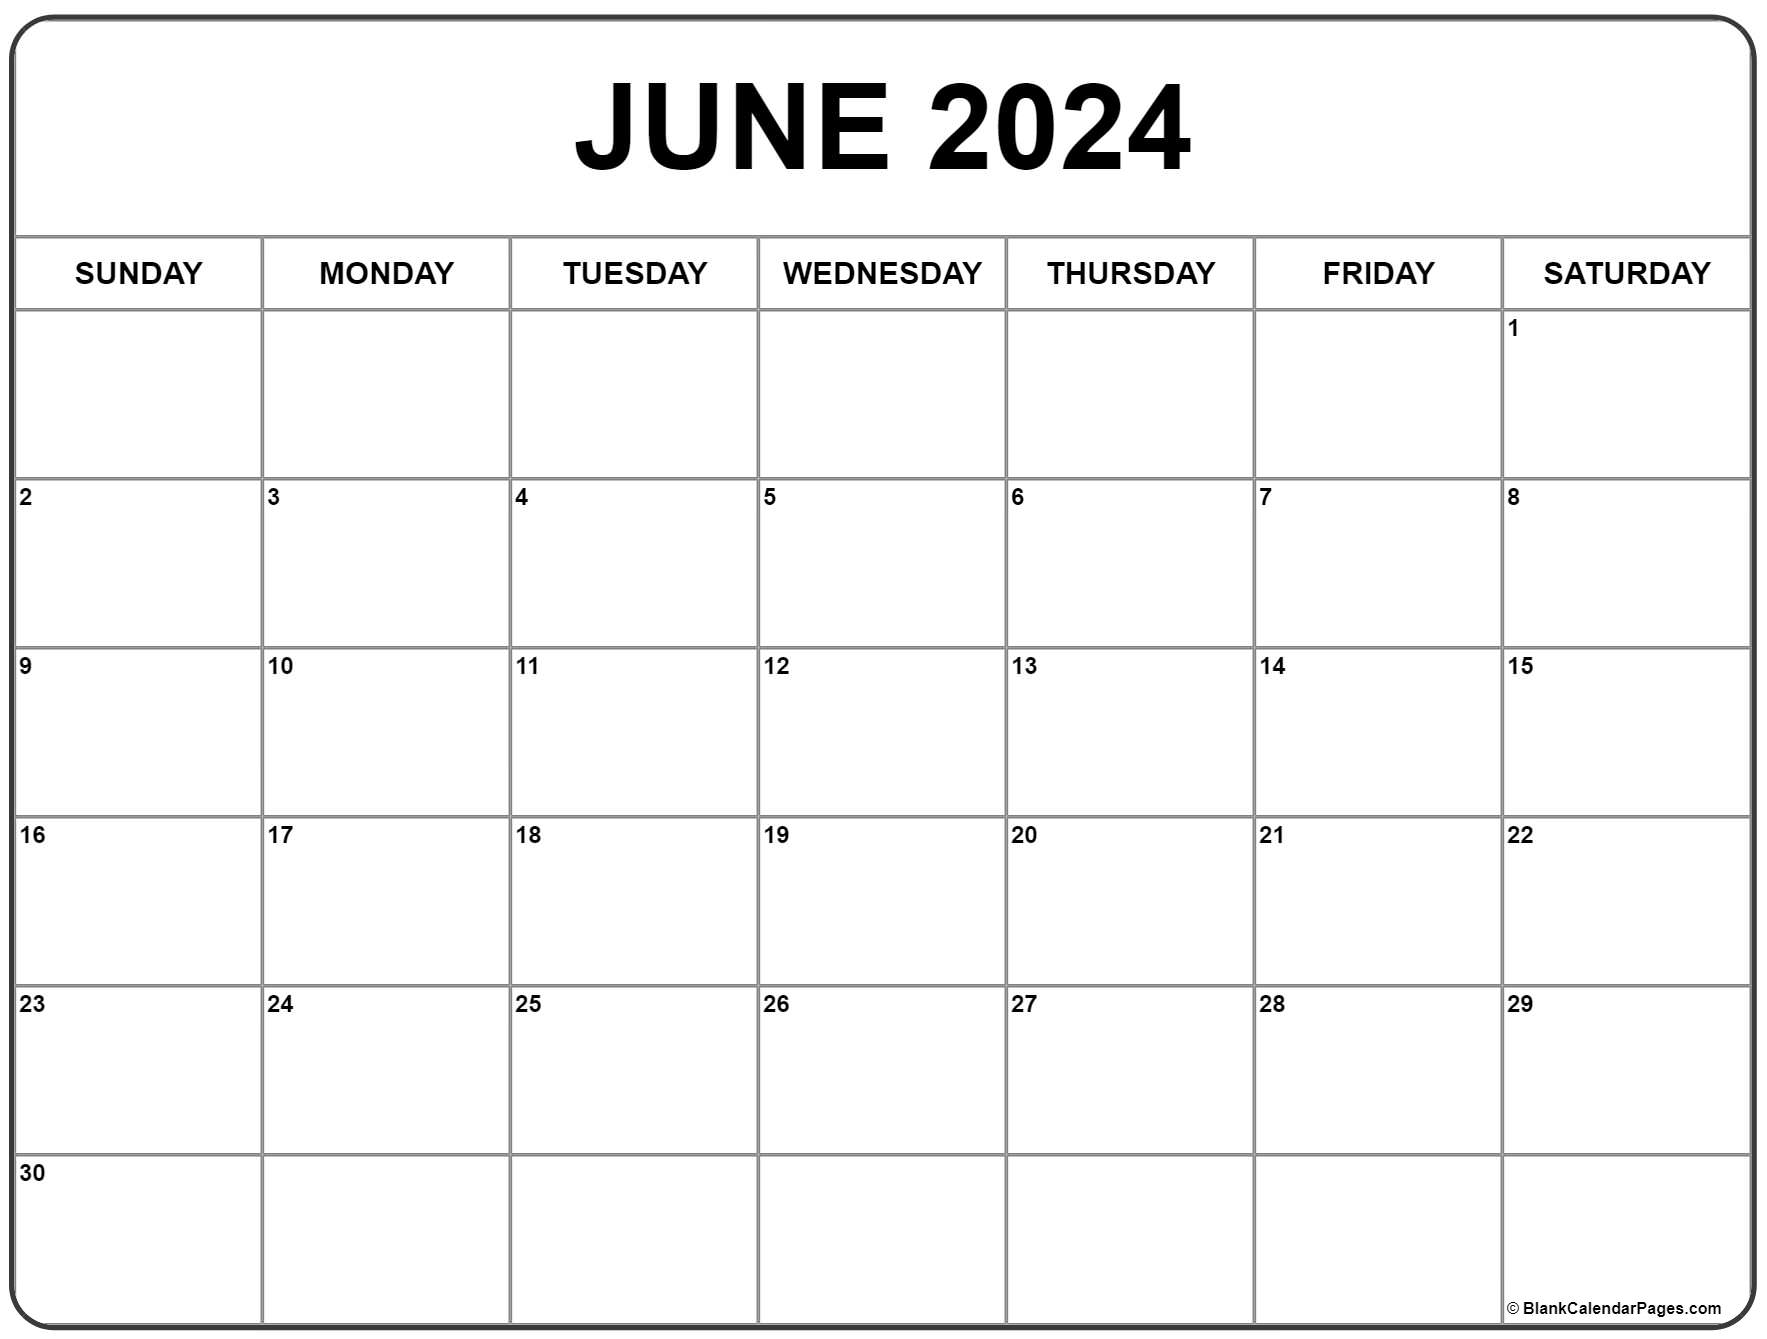 June 2024 Calendar | Free Printable Calendar for Calendar June 2024 Free Printable